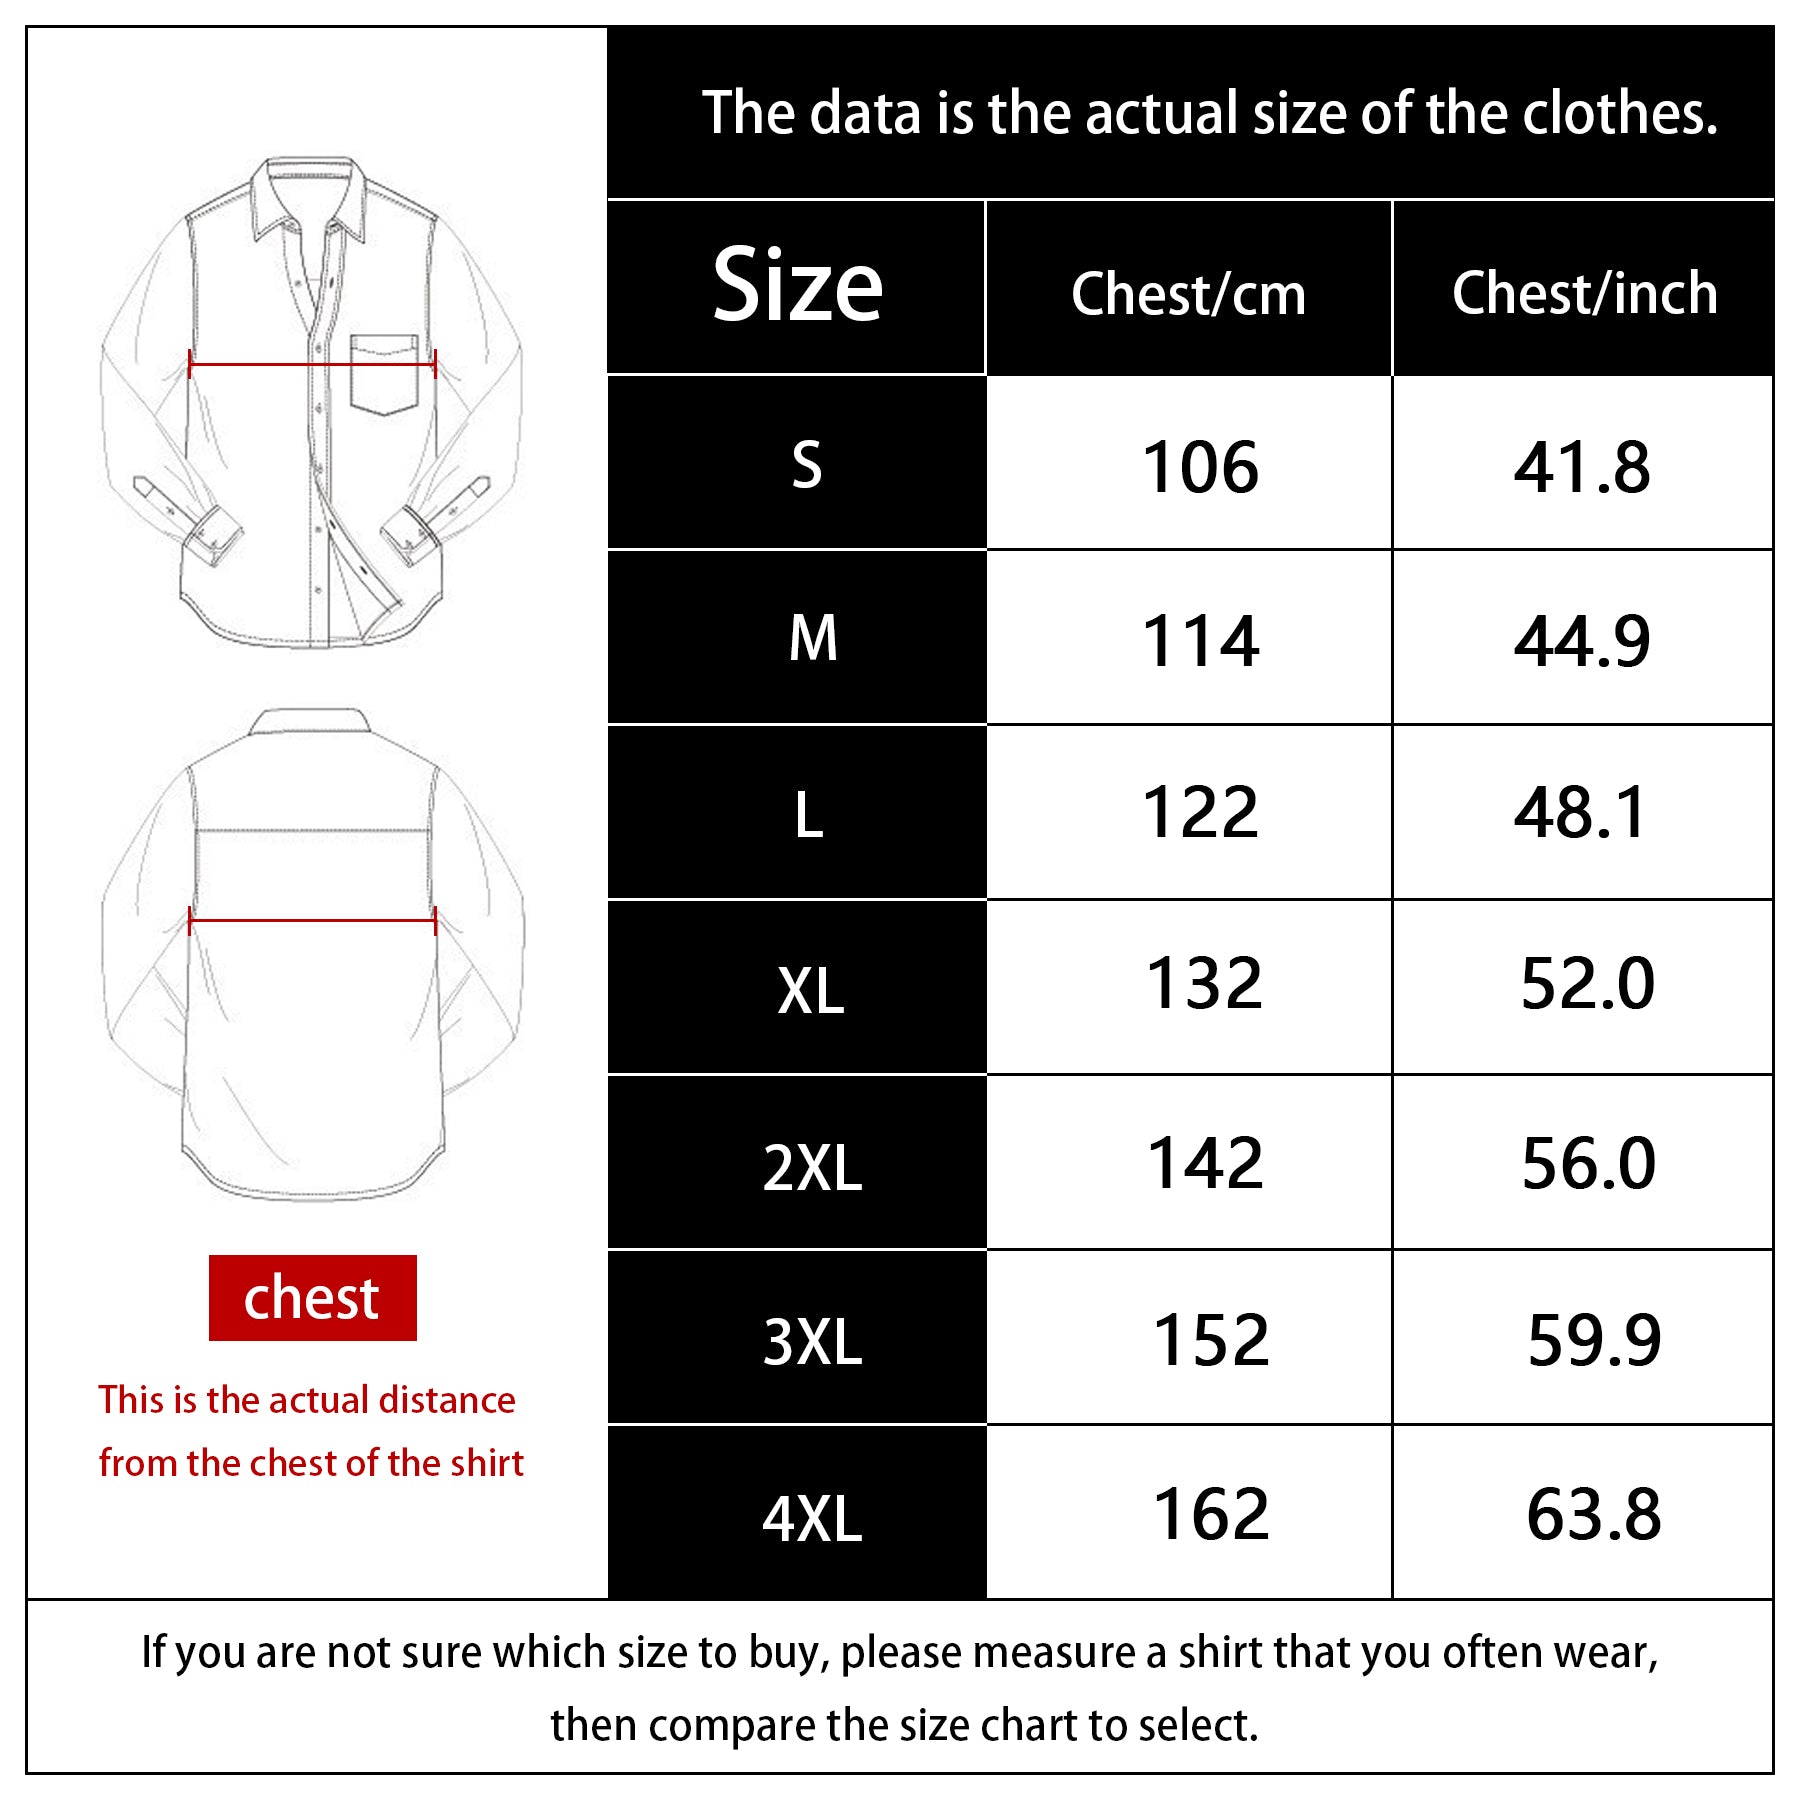 Dubinik Mens Short Sleeve Button Down Shirts 100% Cotton Plaid Casual Shirt with Pocket#0114